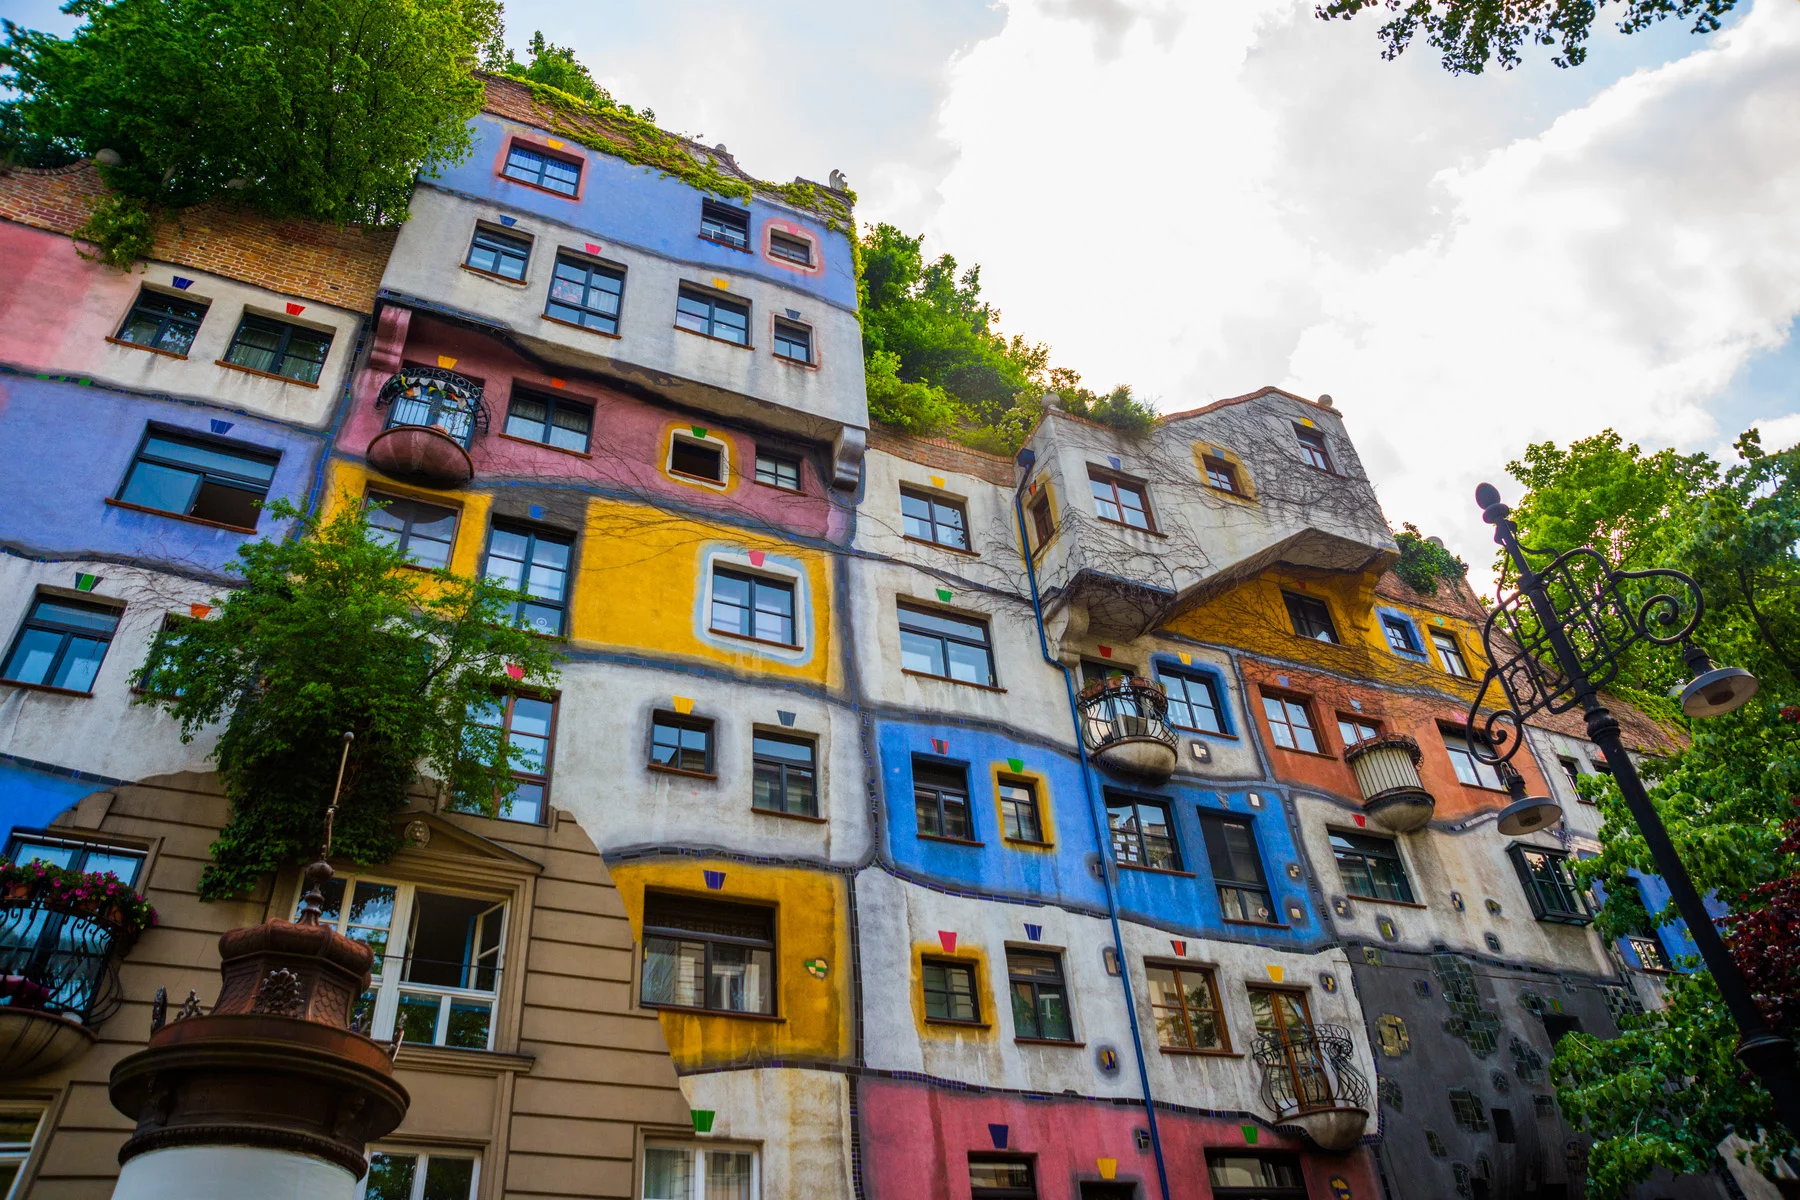 Hundertwasser apartments in Austria